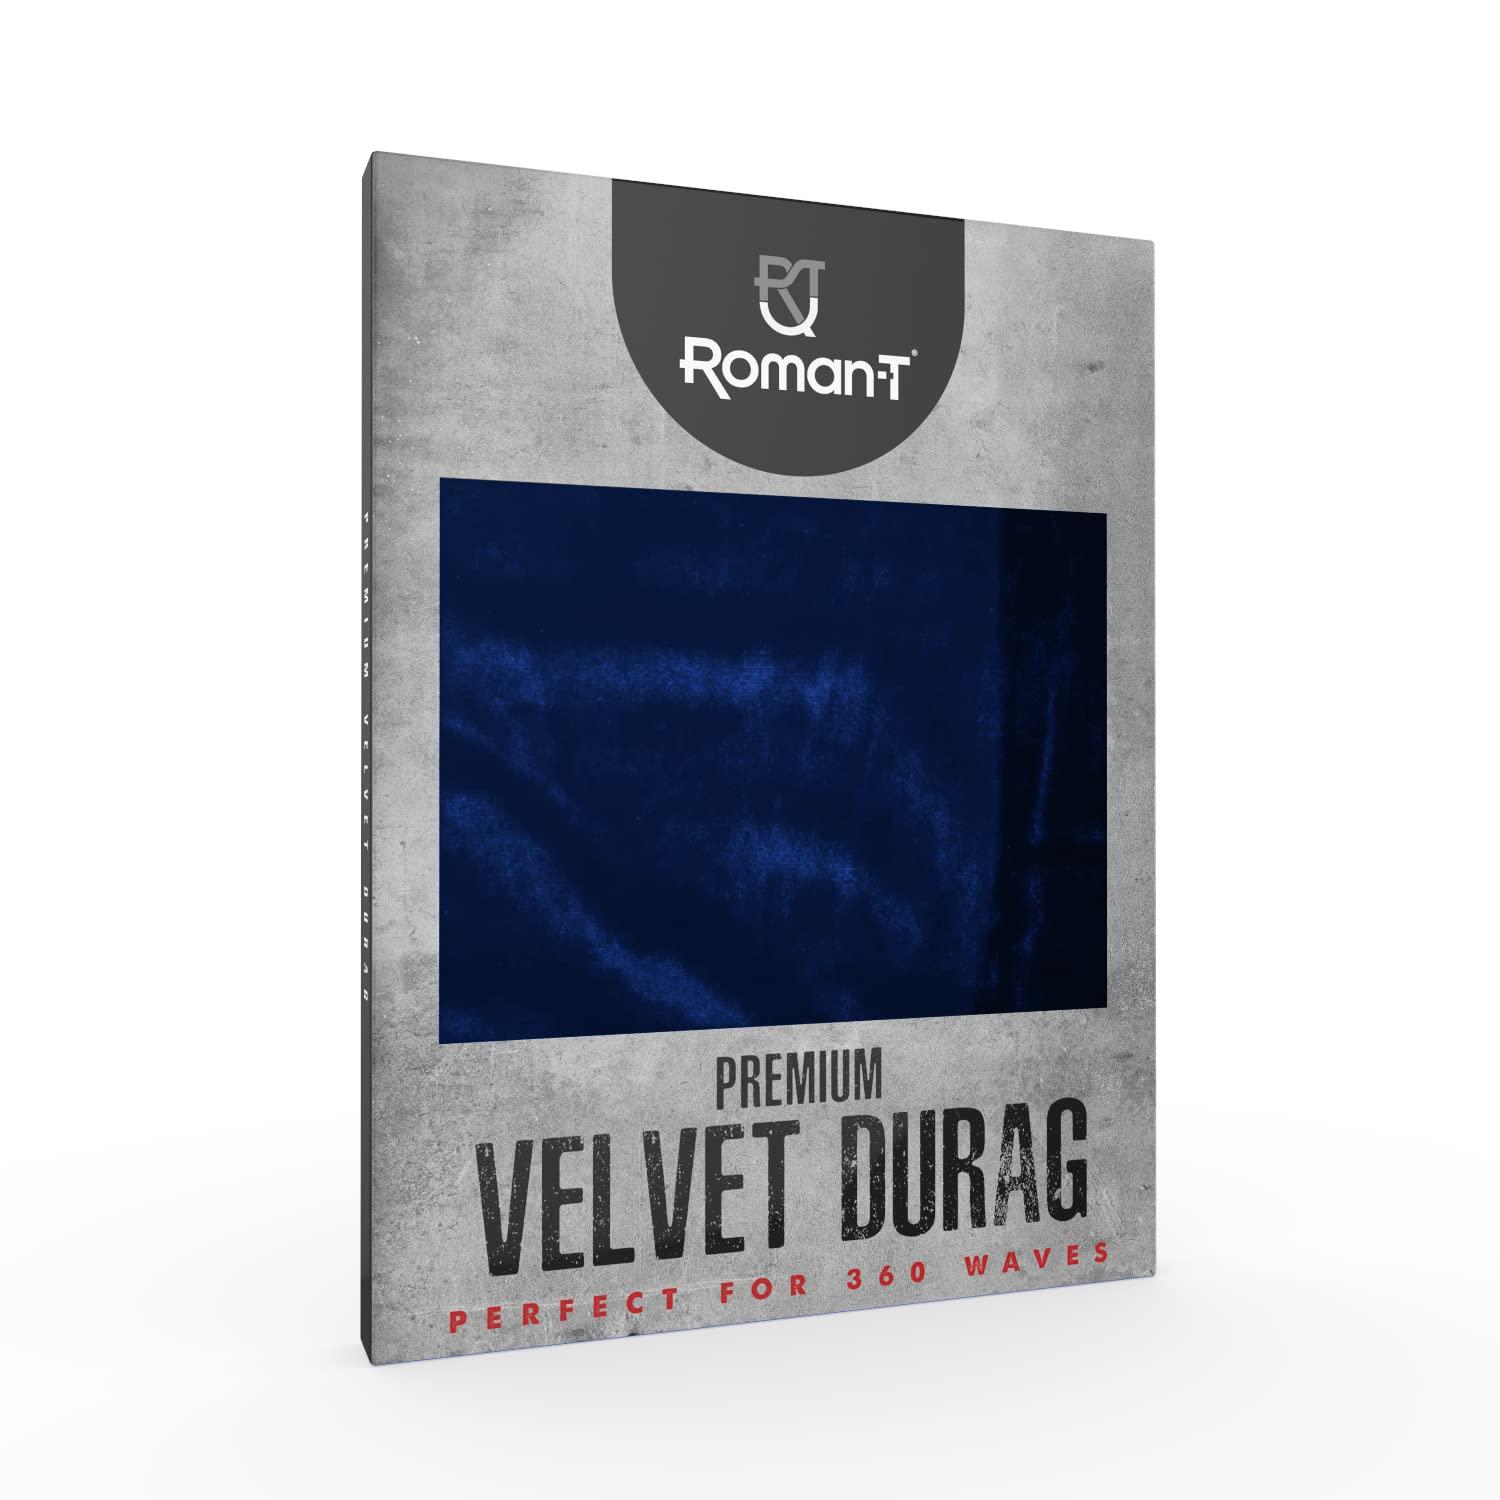 Roman-T Premium Velvet Durag for Men and Women, for, 360 Waves, Curls,  Dreadlocks, and Locks, Long & Wide Tails, Ultra Soft and Comfortable du rag  for